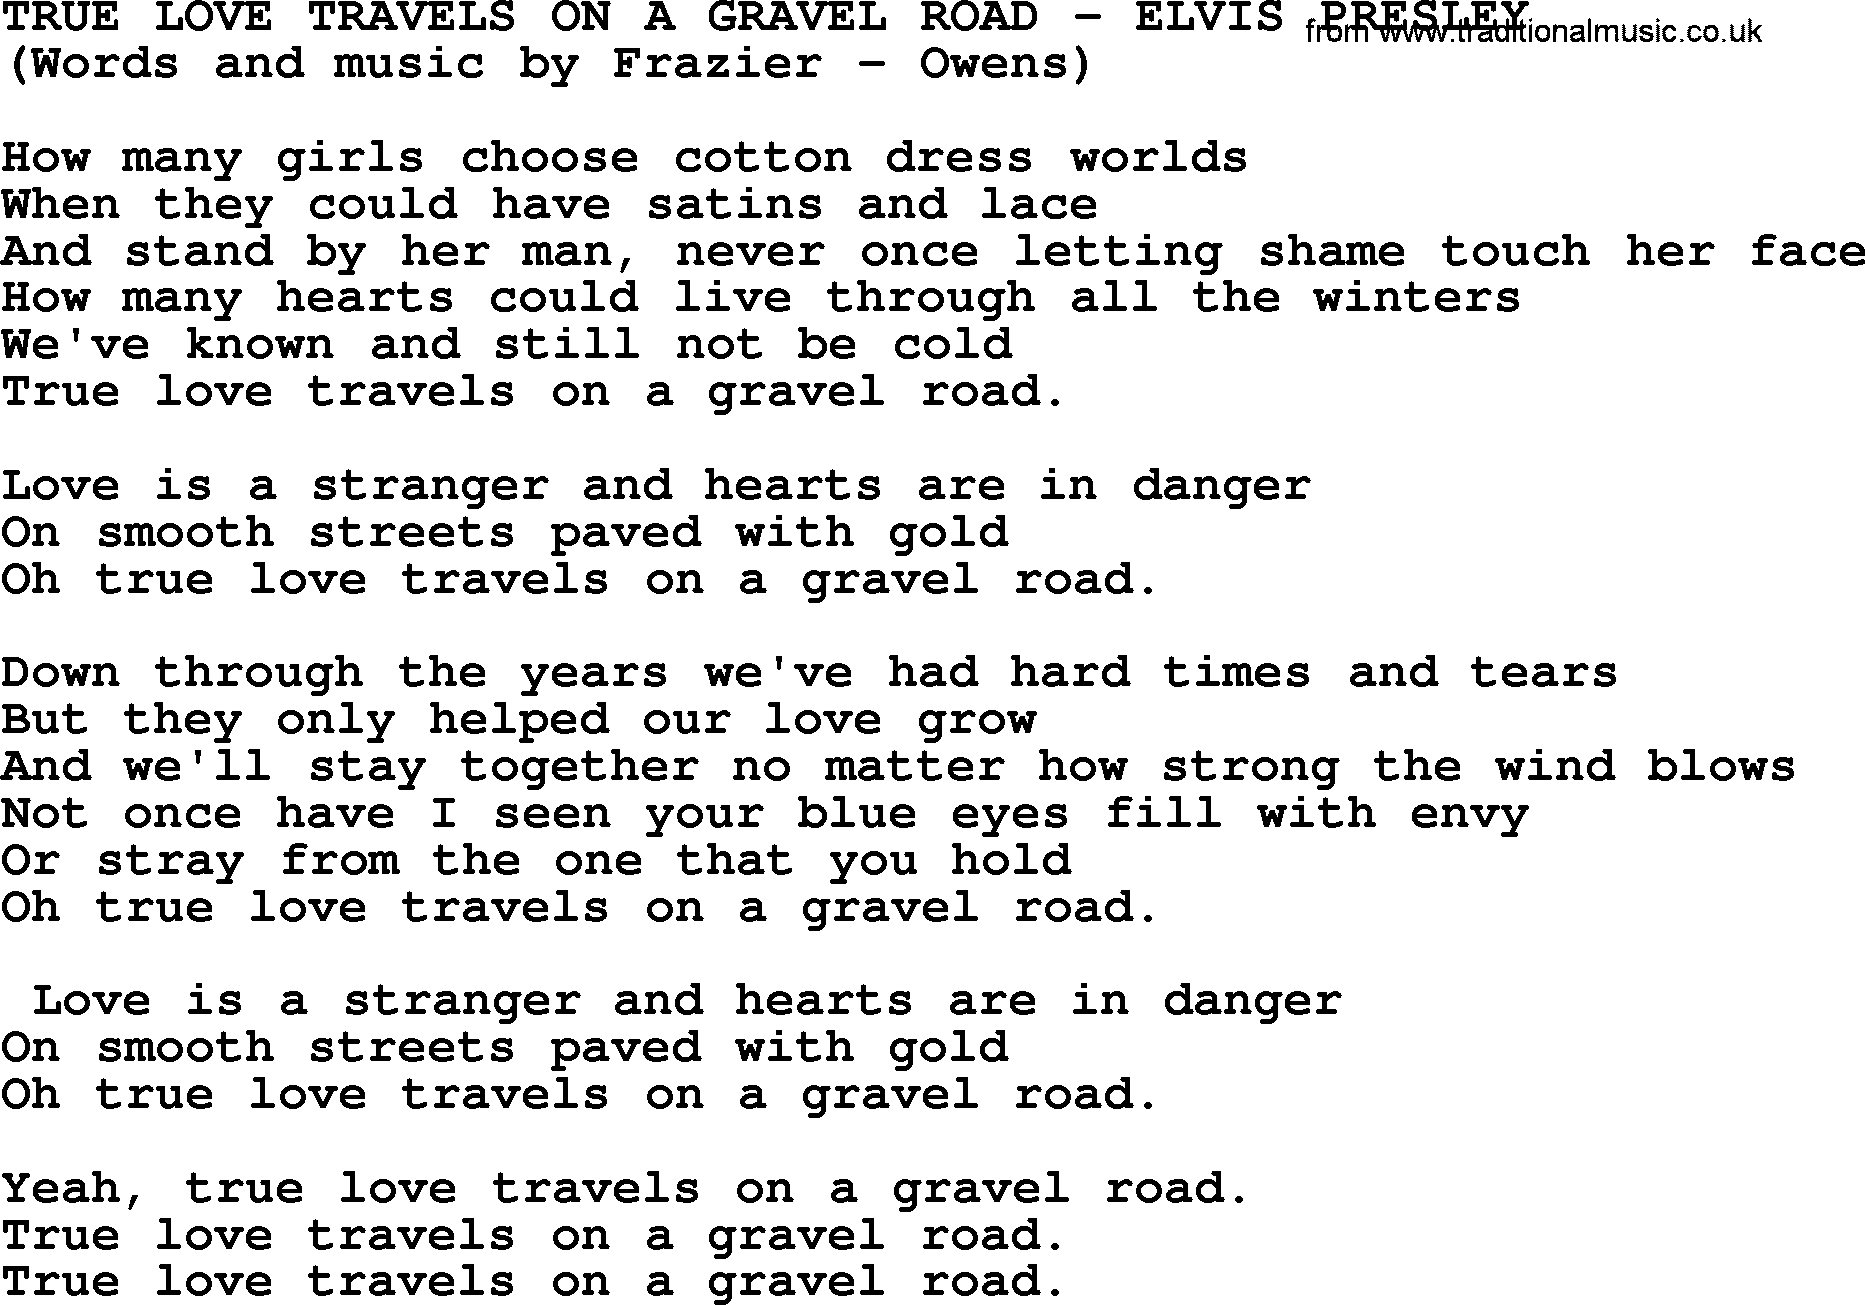 Elvis Presley song: True Love Travels On A Gravel Road lyrics